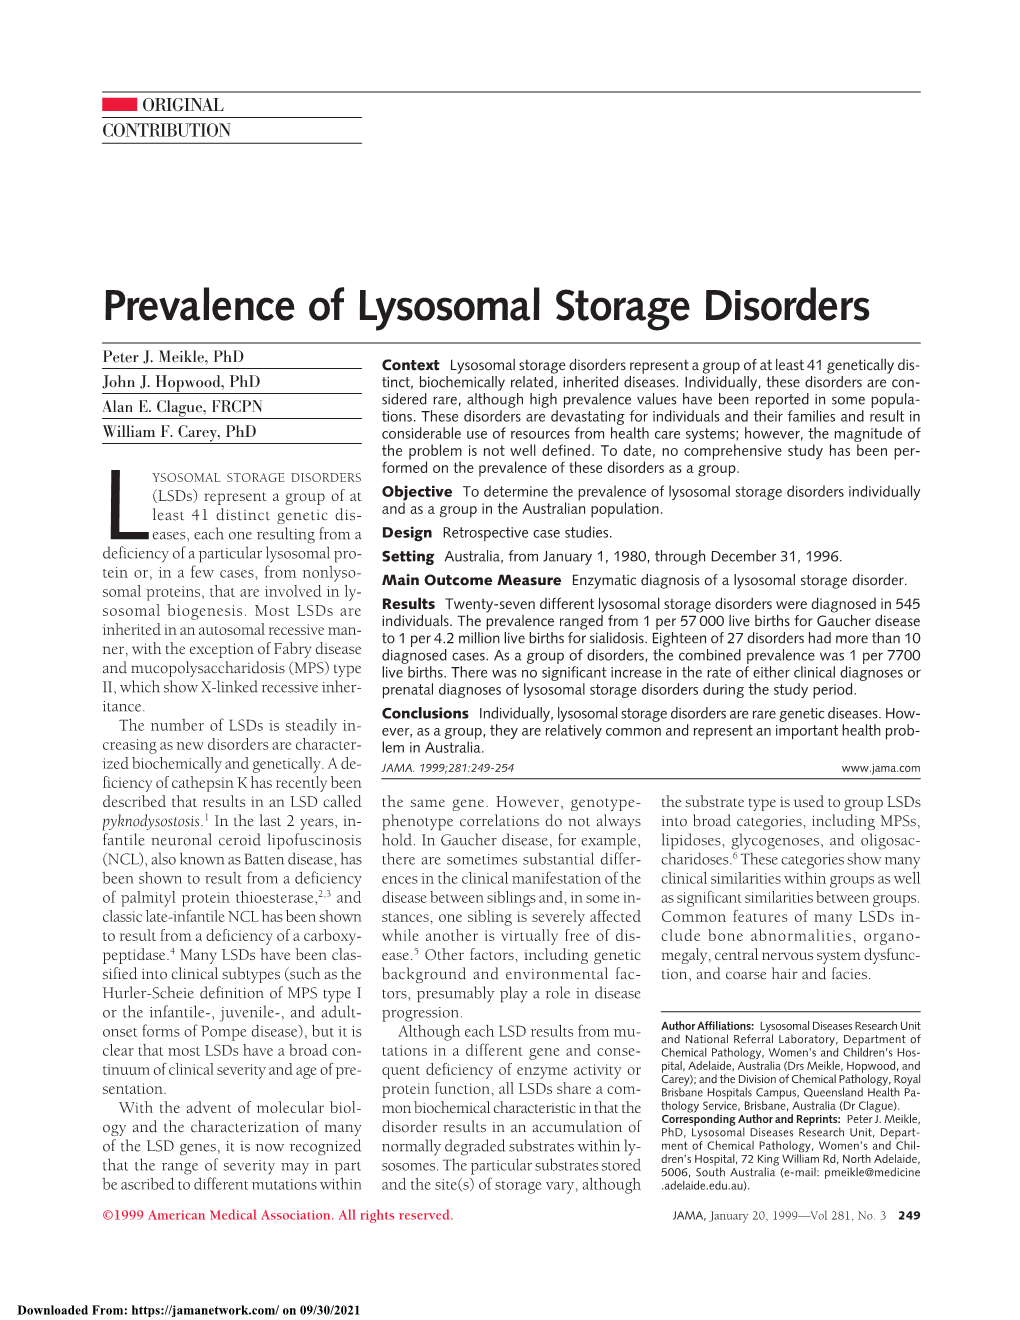 Prevalence of Lysosomal Storage Disorders